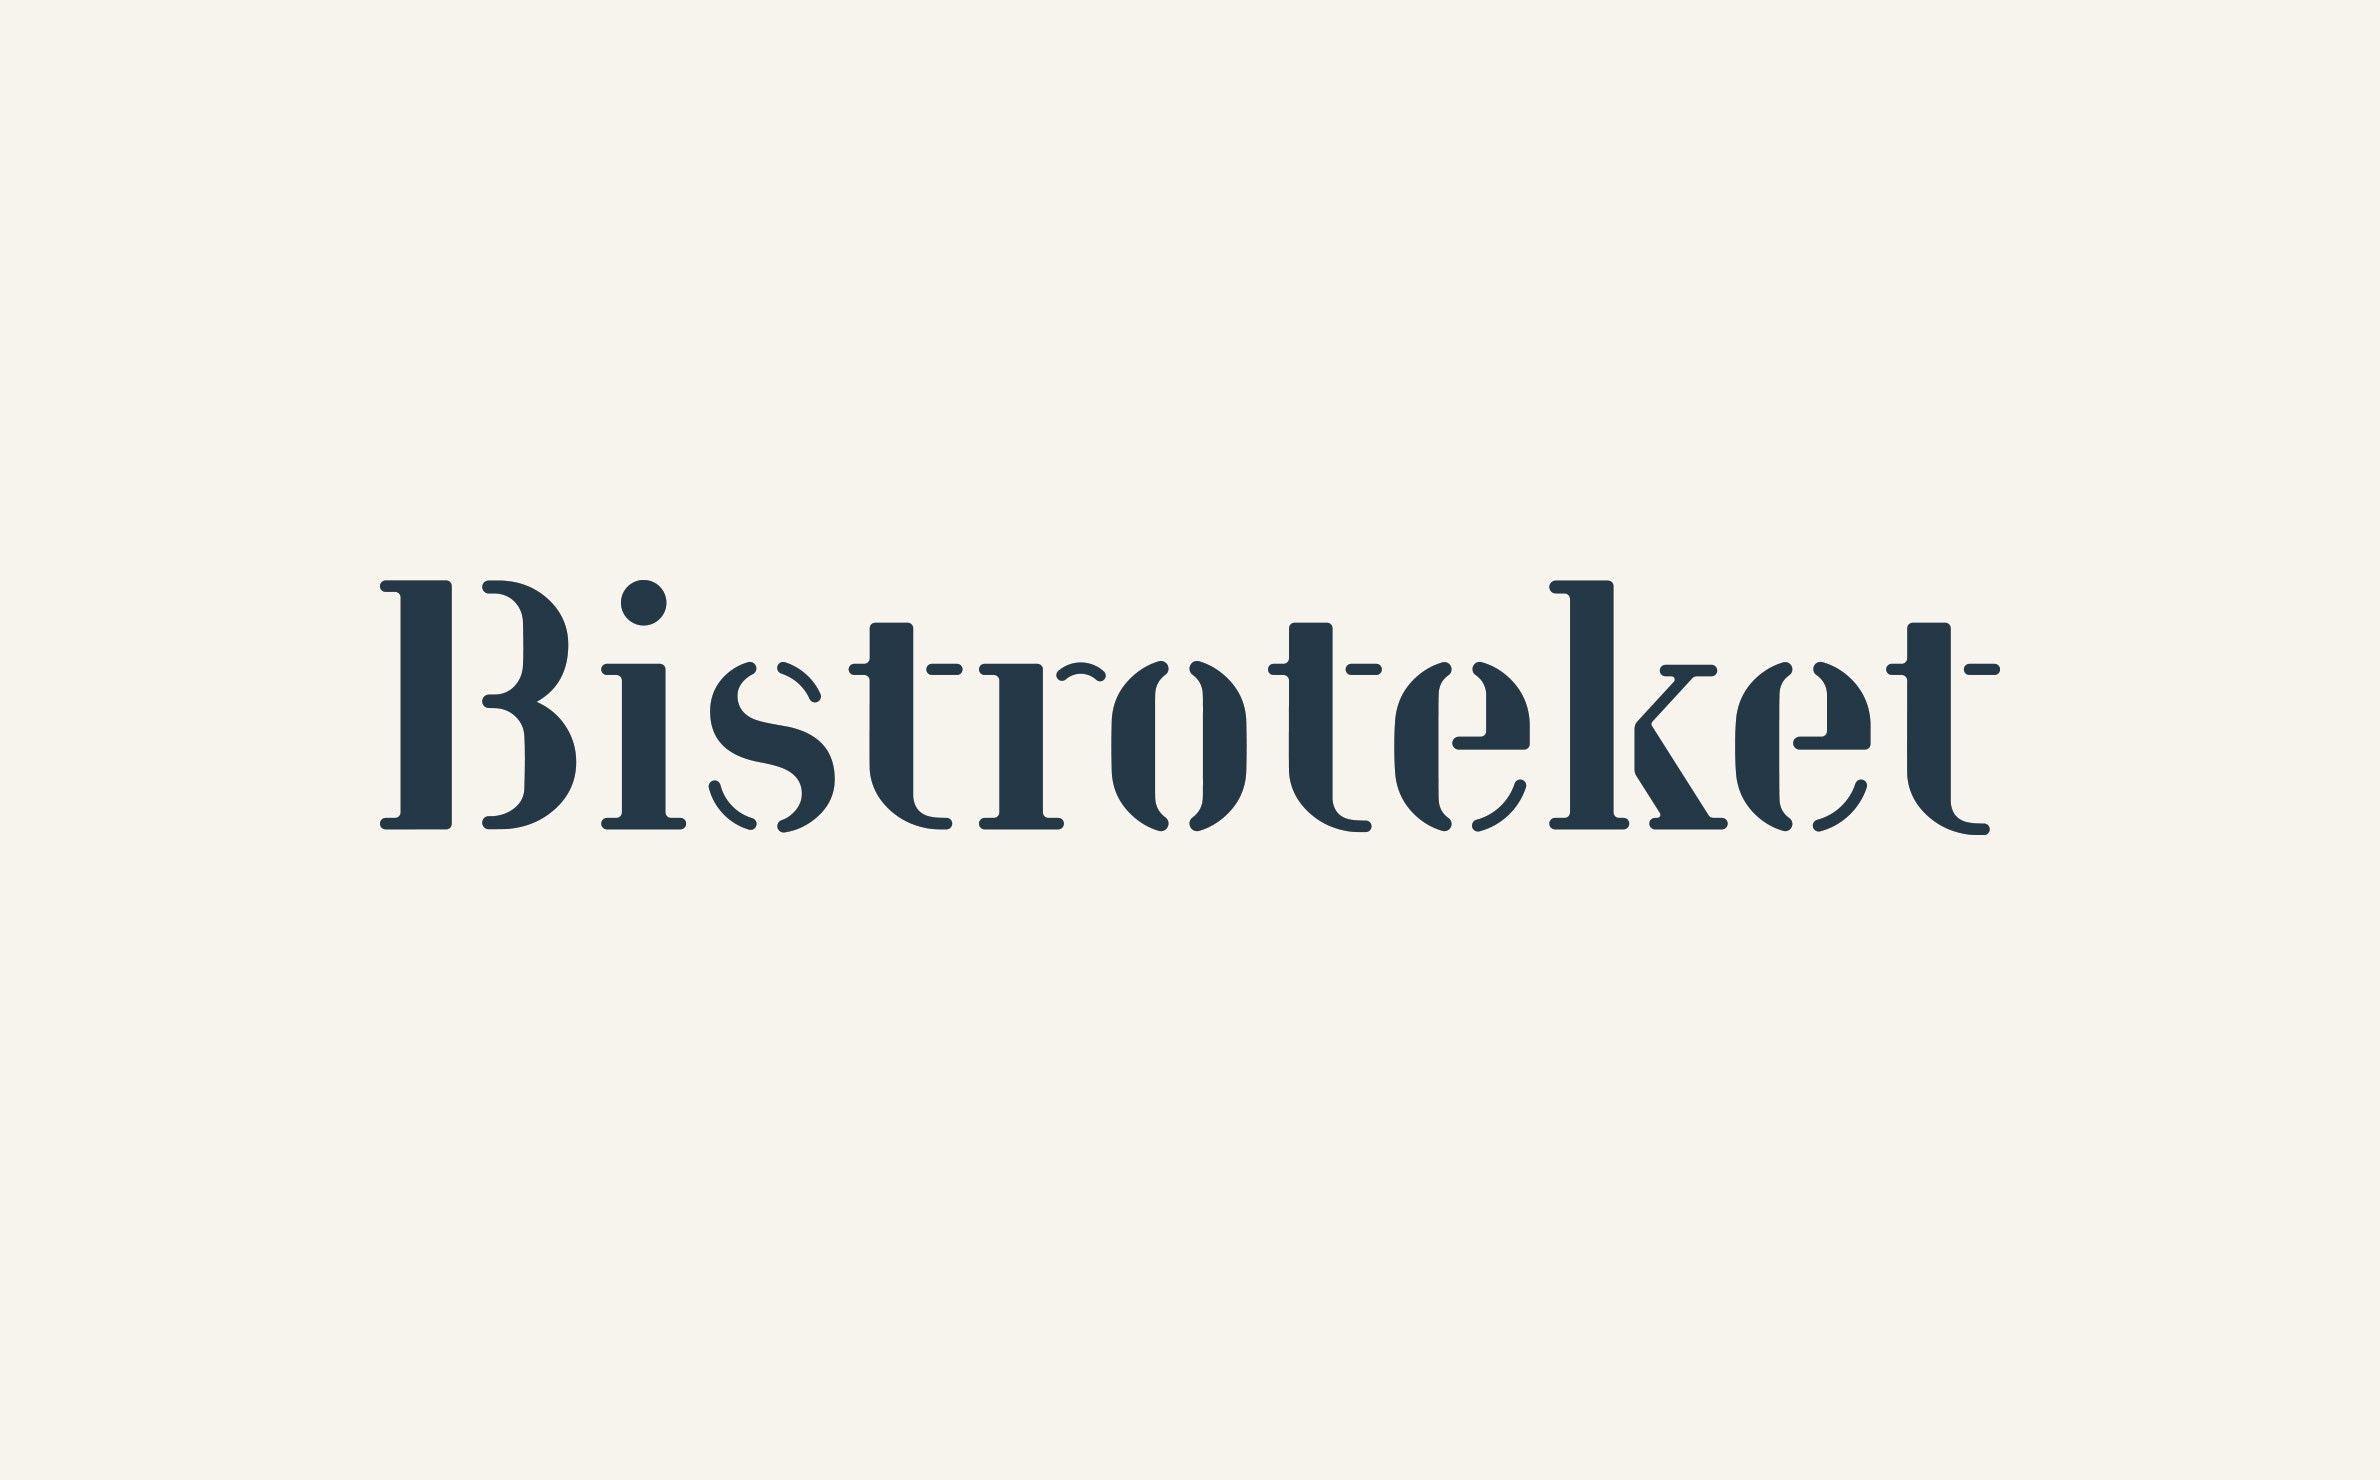 Swedish Restaurant Logo - Great stencil friendly typographical solution for Bistroteket